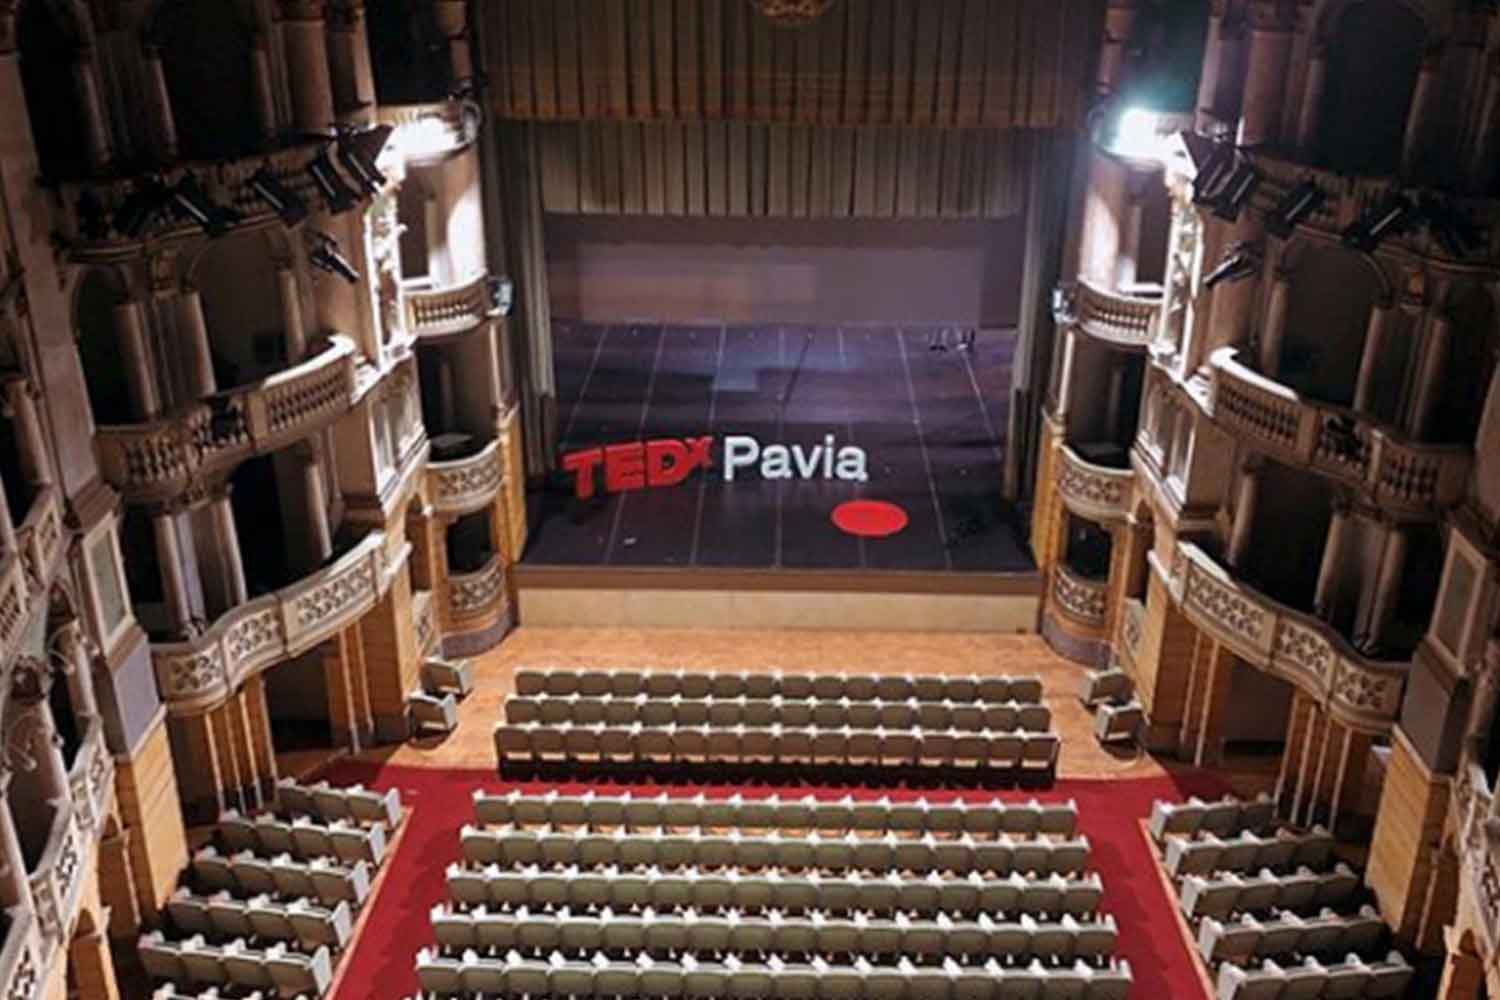 tedx pavia theater